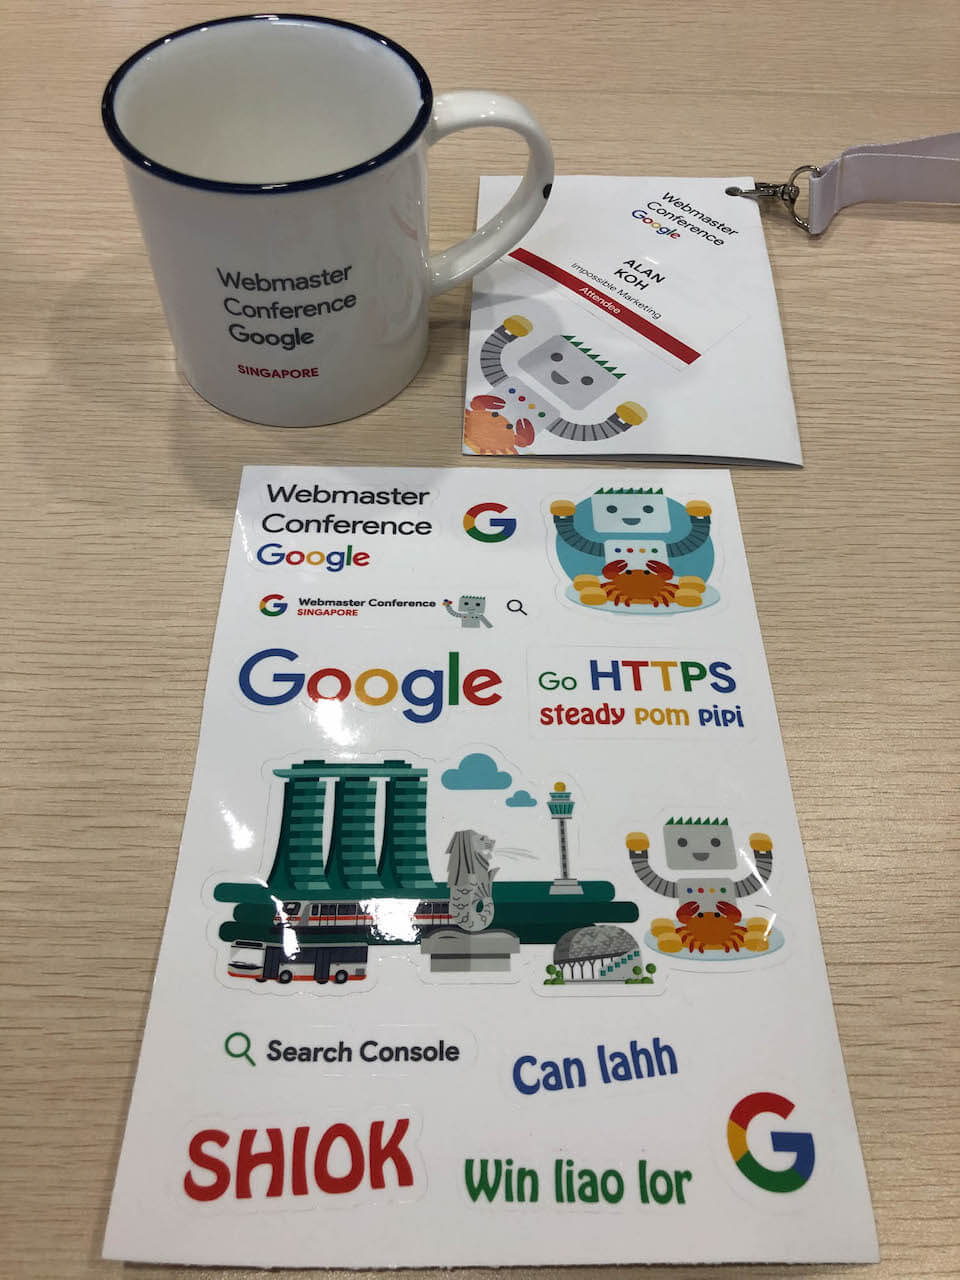 google webmaster conference 2019 in